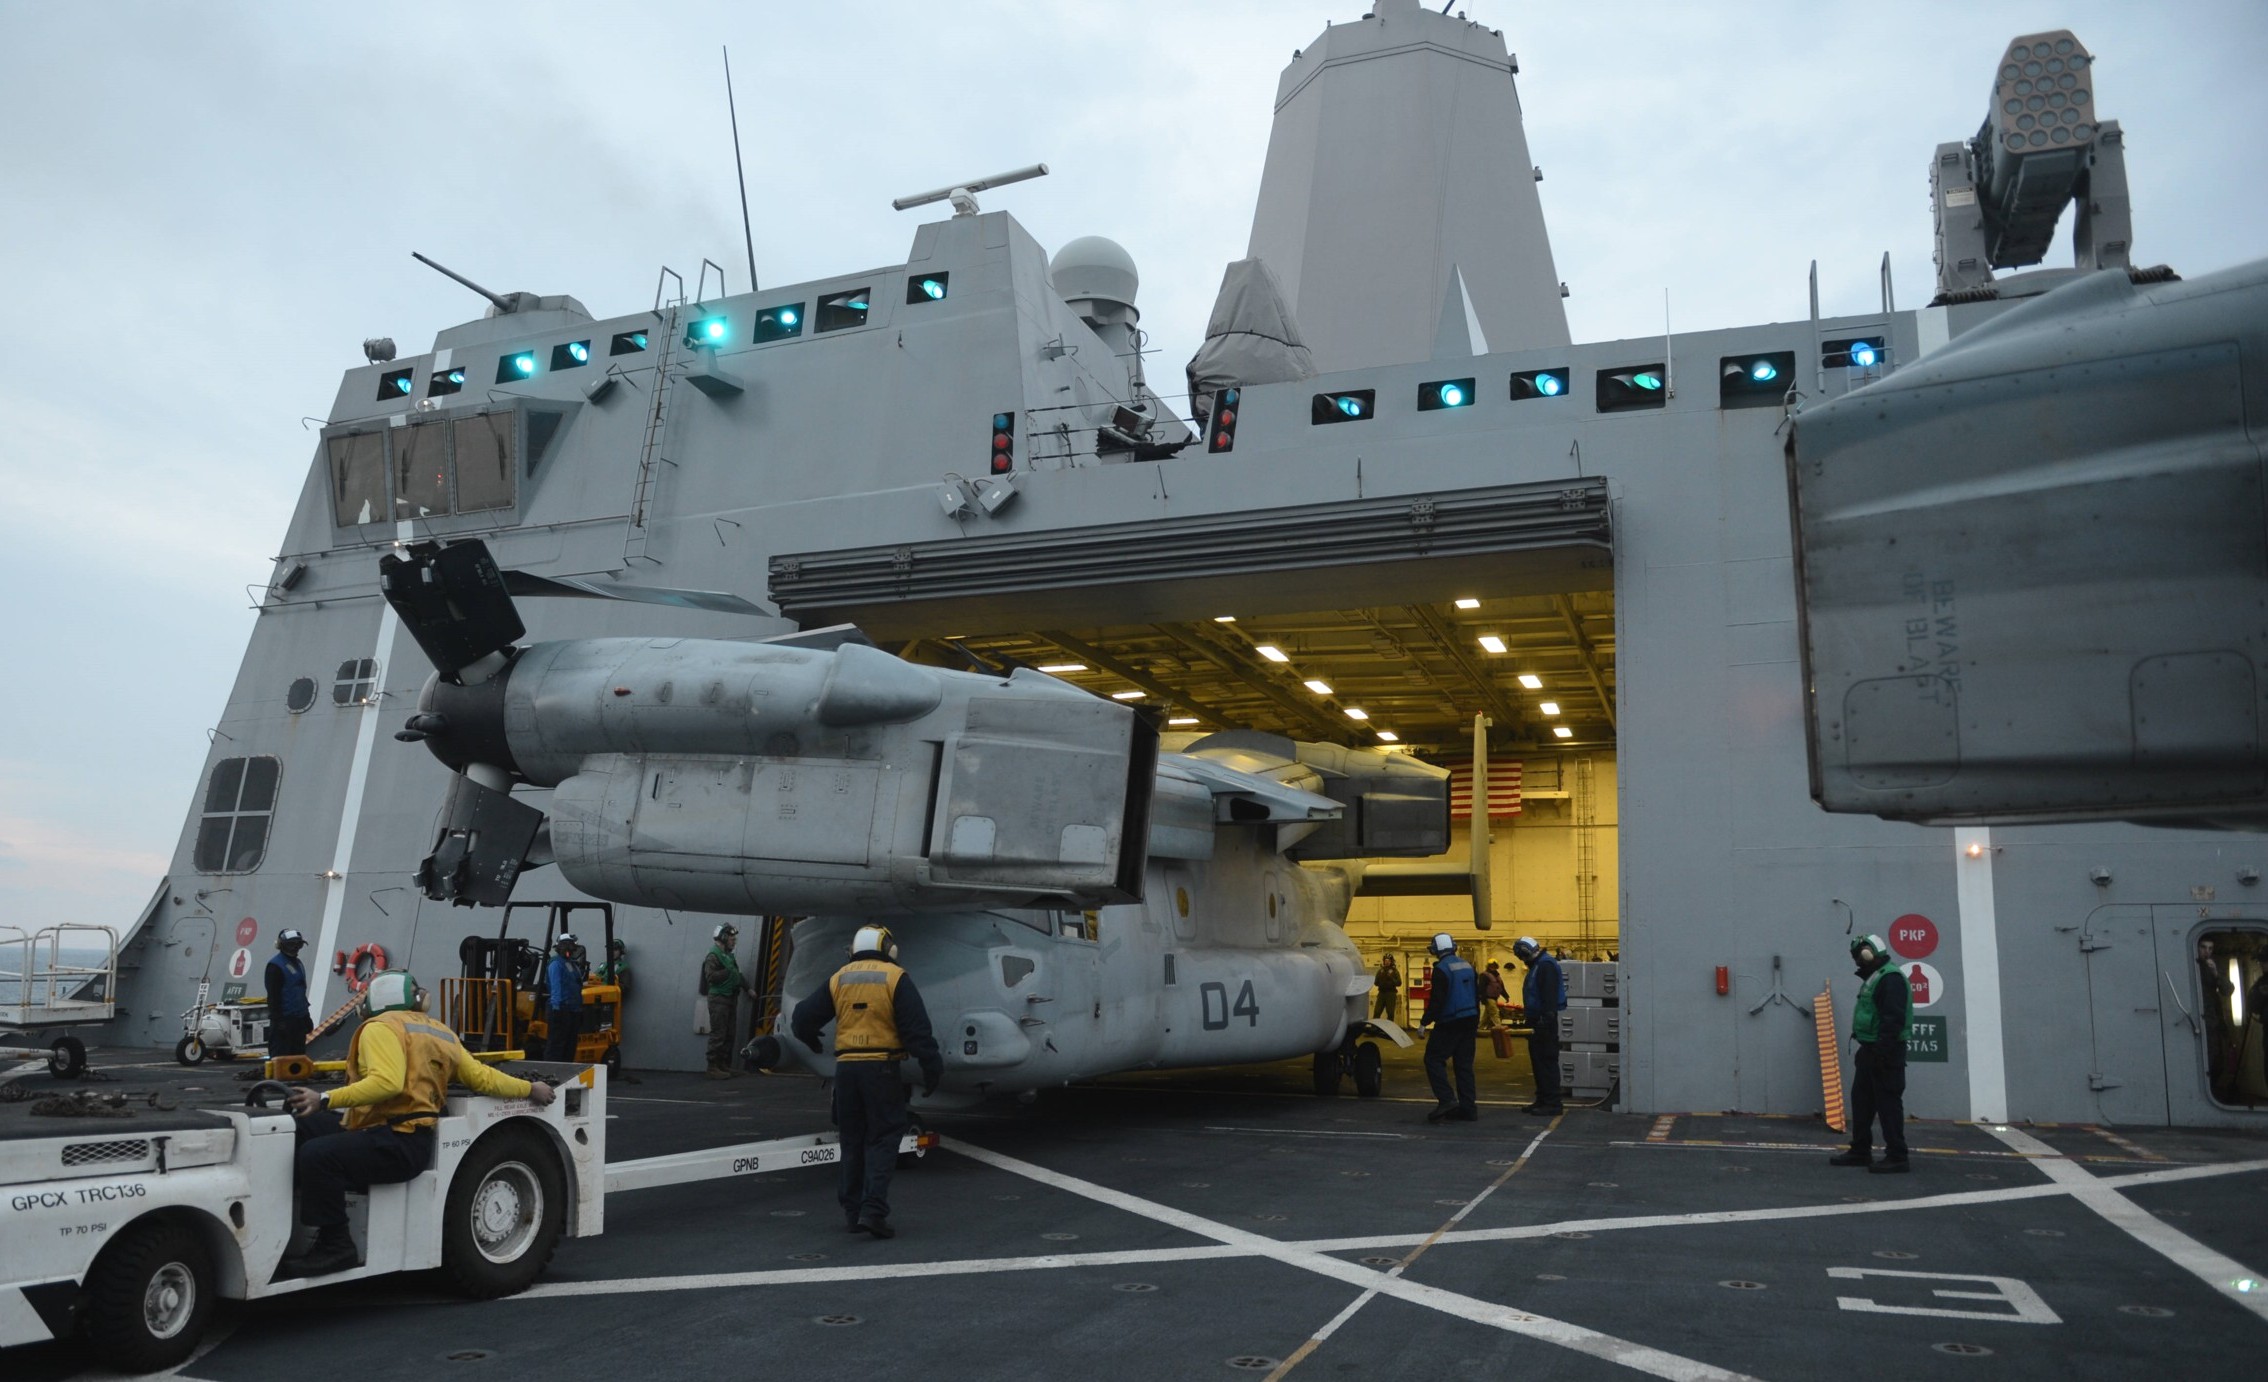 lpd-19 uss mesa verde san antonio class amphibious transport dock landing ship us navy mv-22b osprey 29